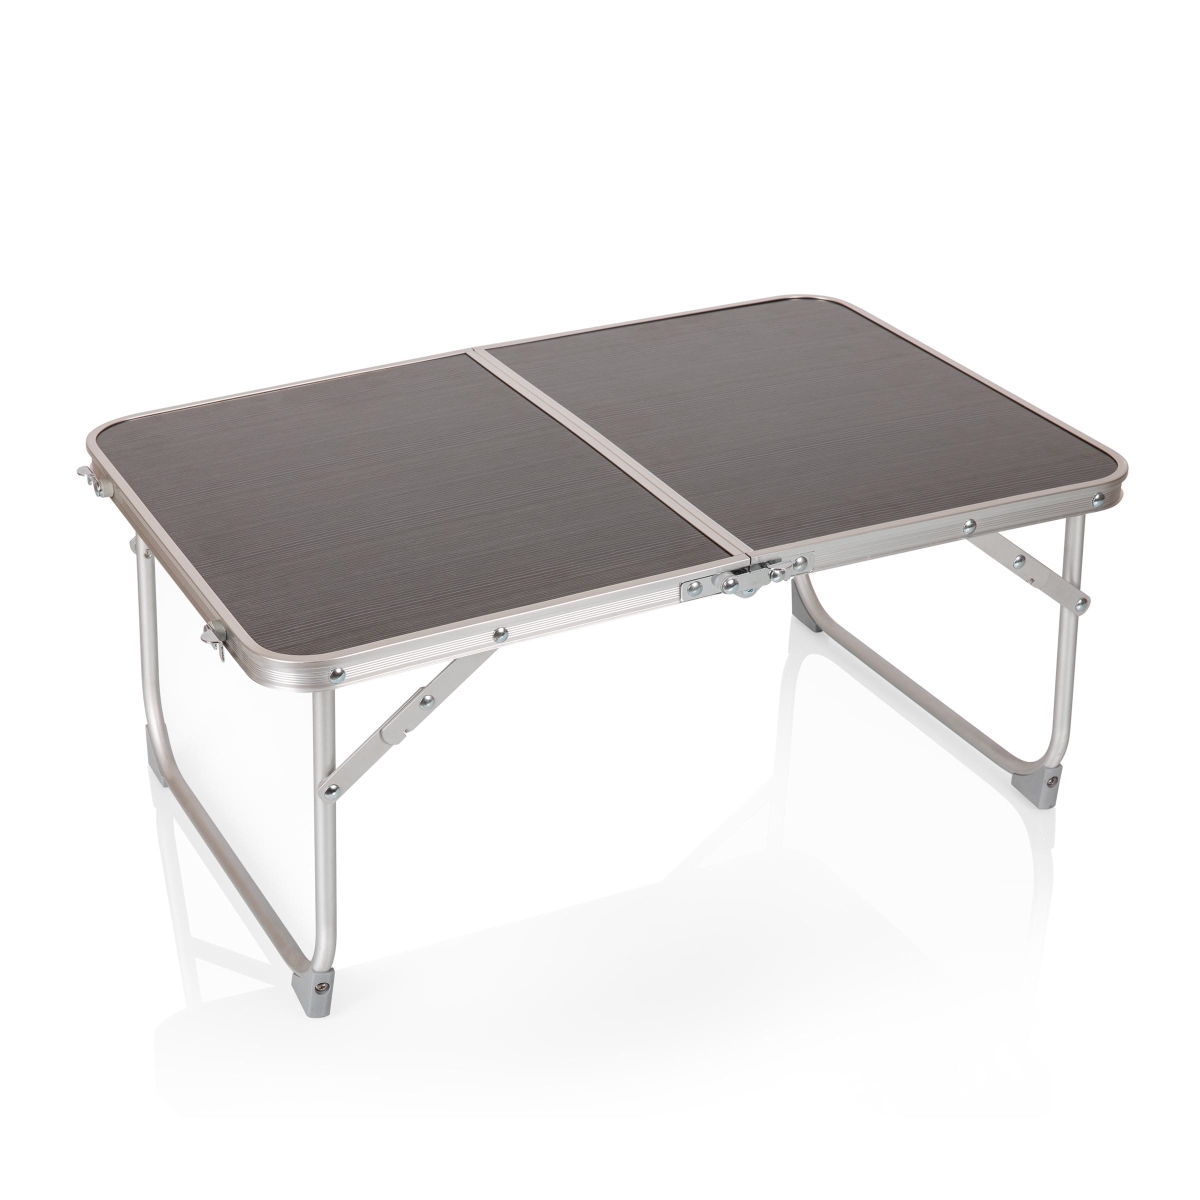 843-00-141-000-0 Concert Table Mini Portable Table, Charcoal Wood Grain